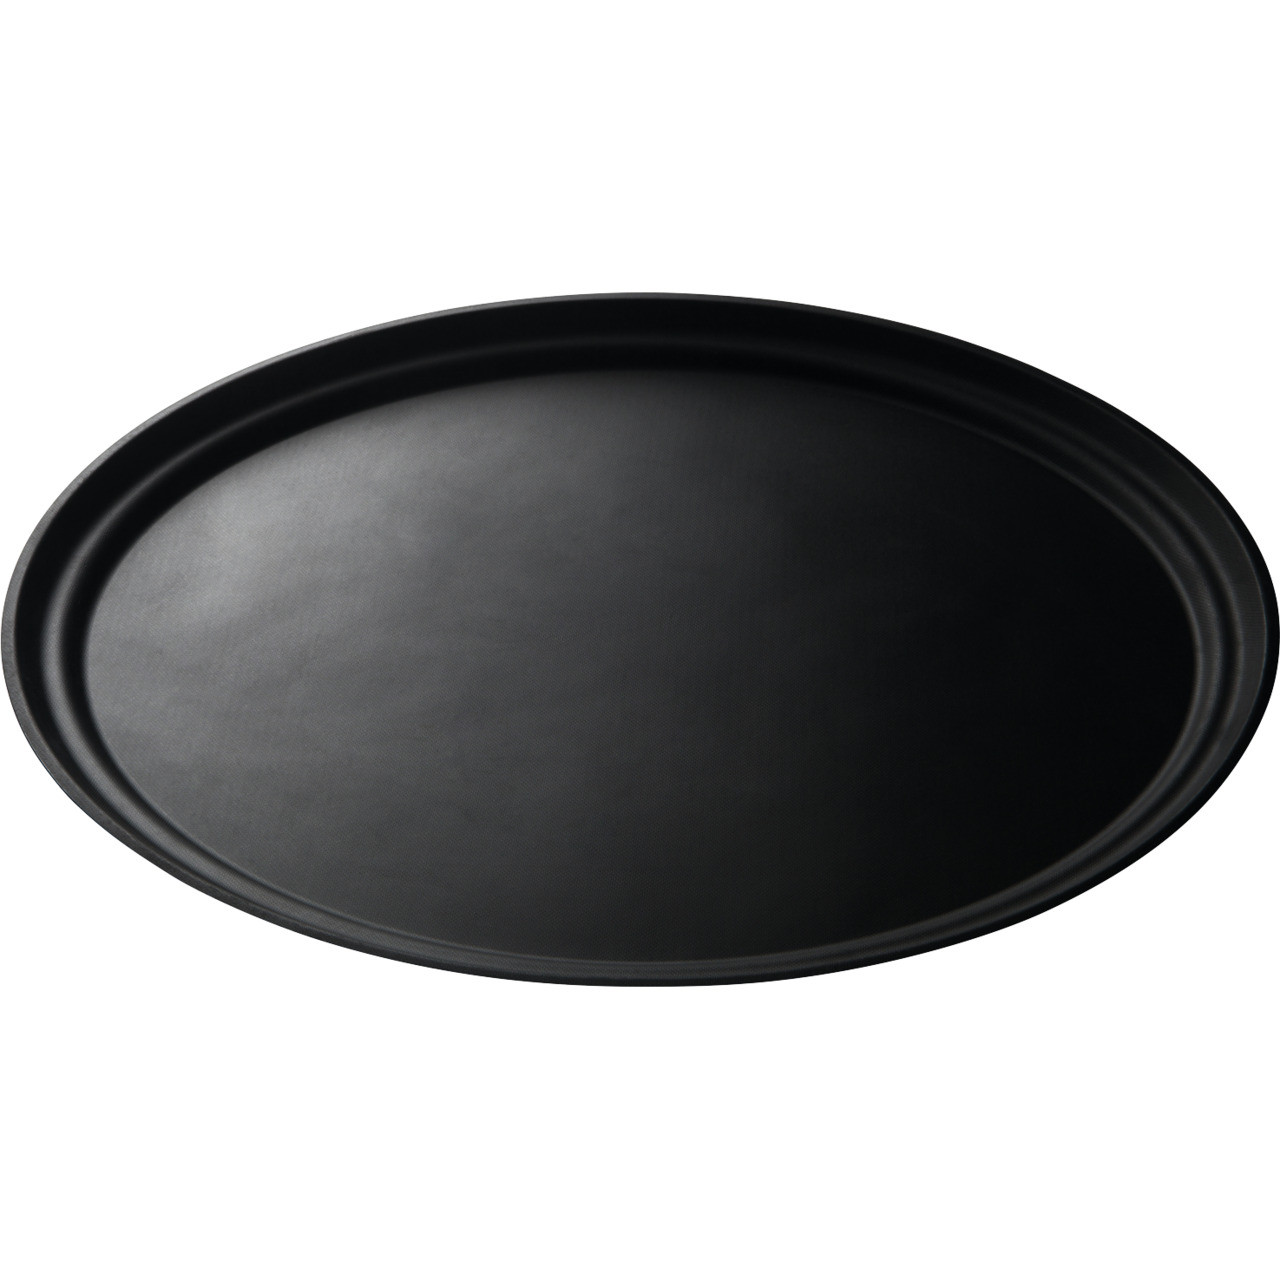 Camtread-Tablett oval 490 x 590 schwarz